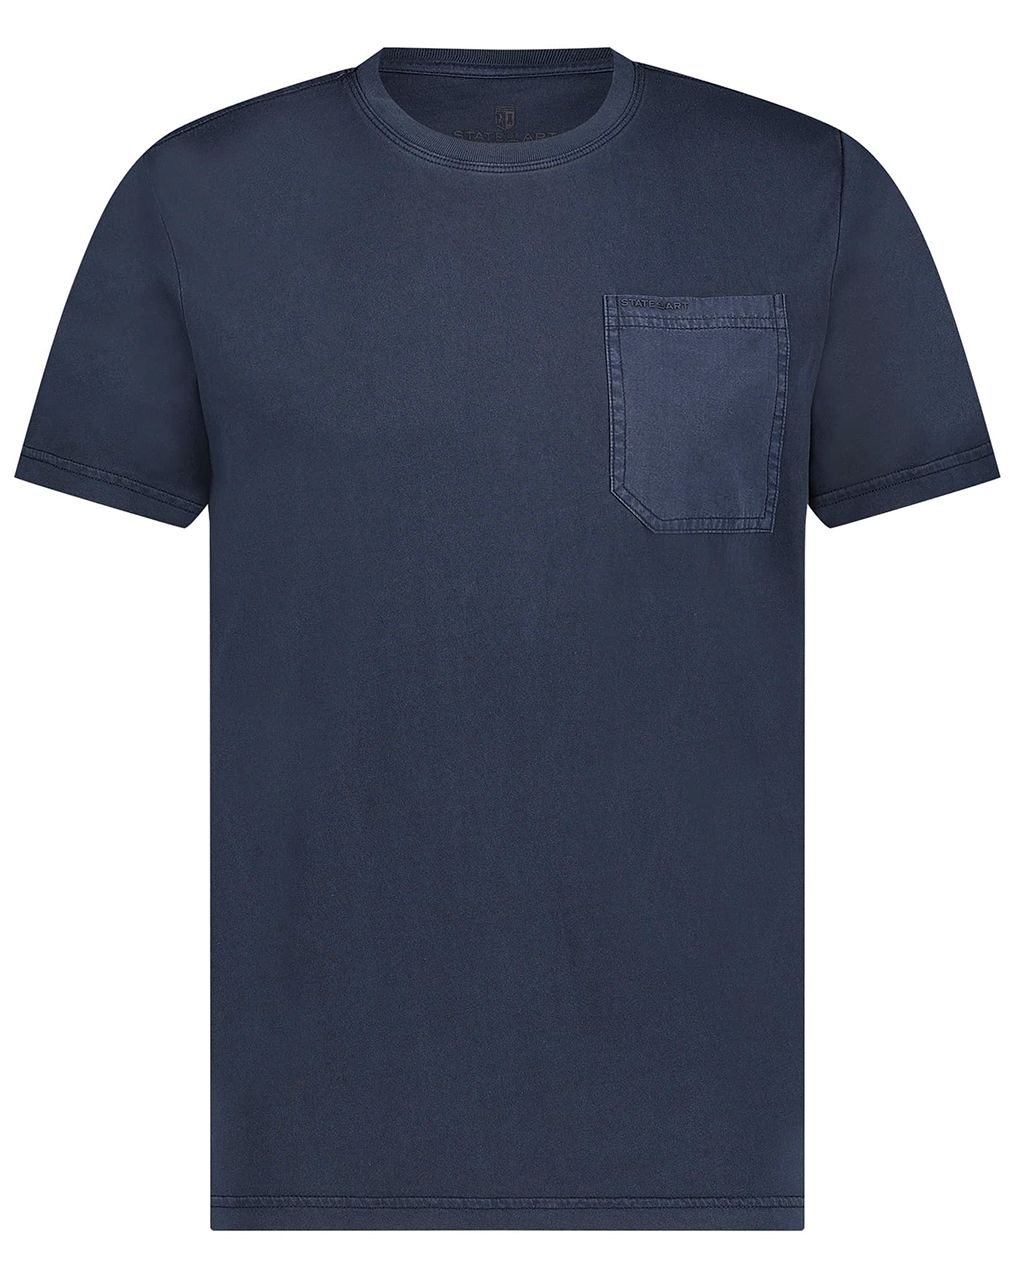 State of Art T-shirt KM Donker blauw 079524-001-4XL